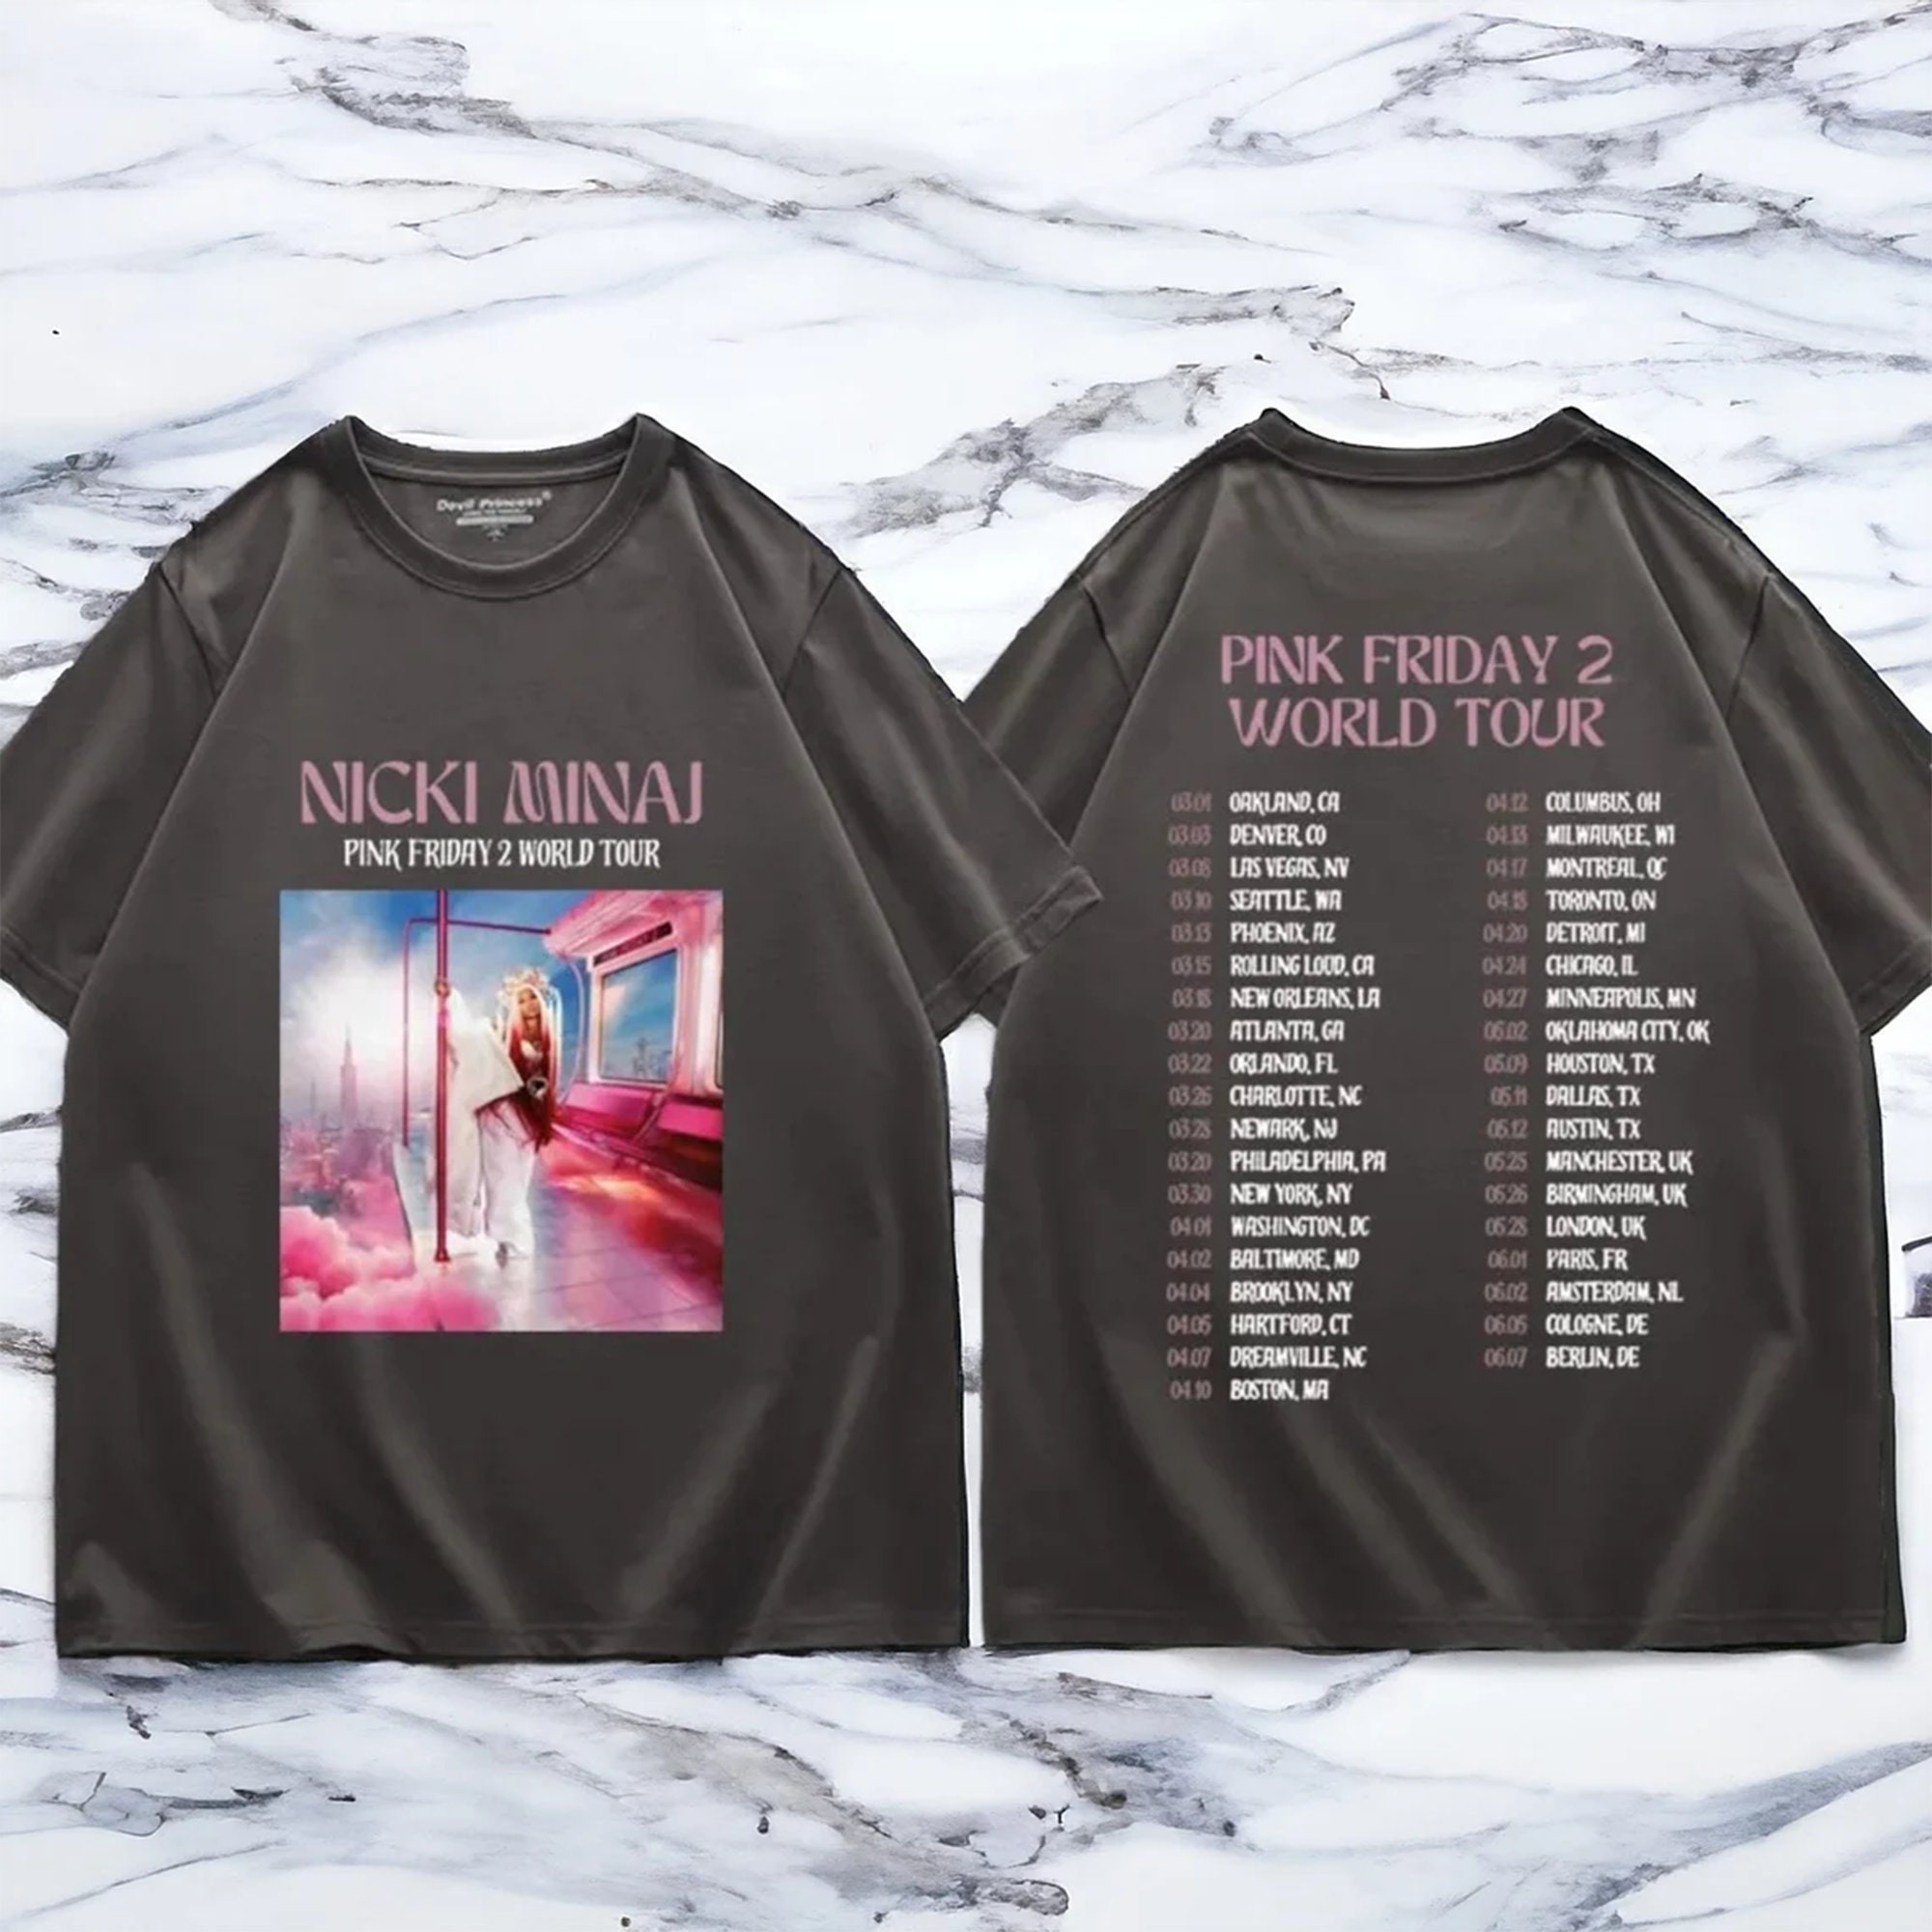 Nicki Minaj Pink Friday 2 World Tour T-Shirt, Nicki Minaj Album T-Shirt